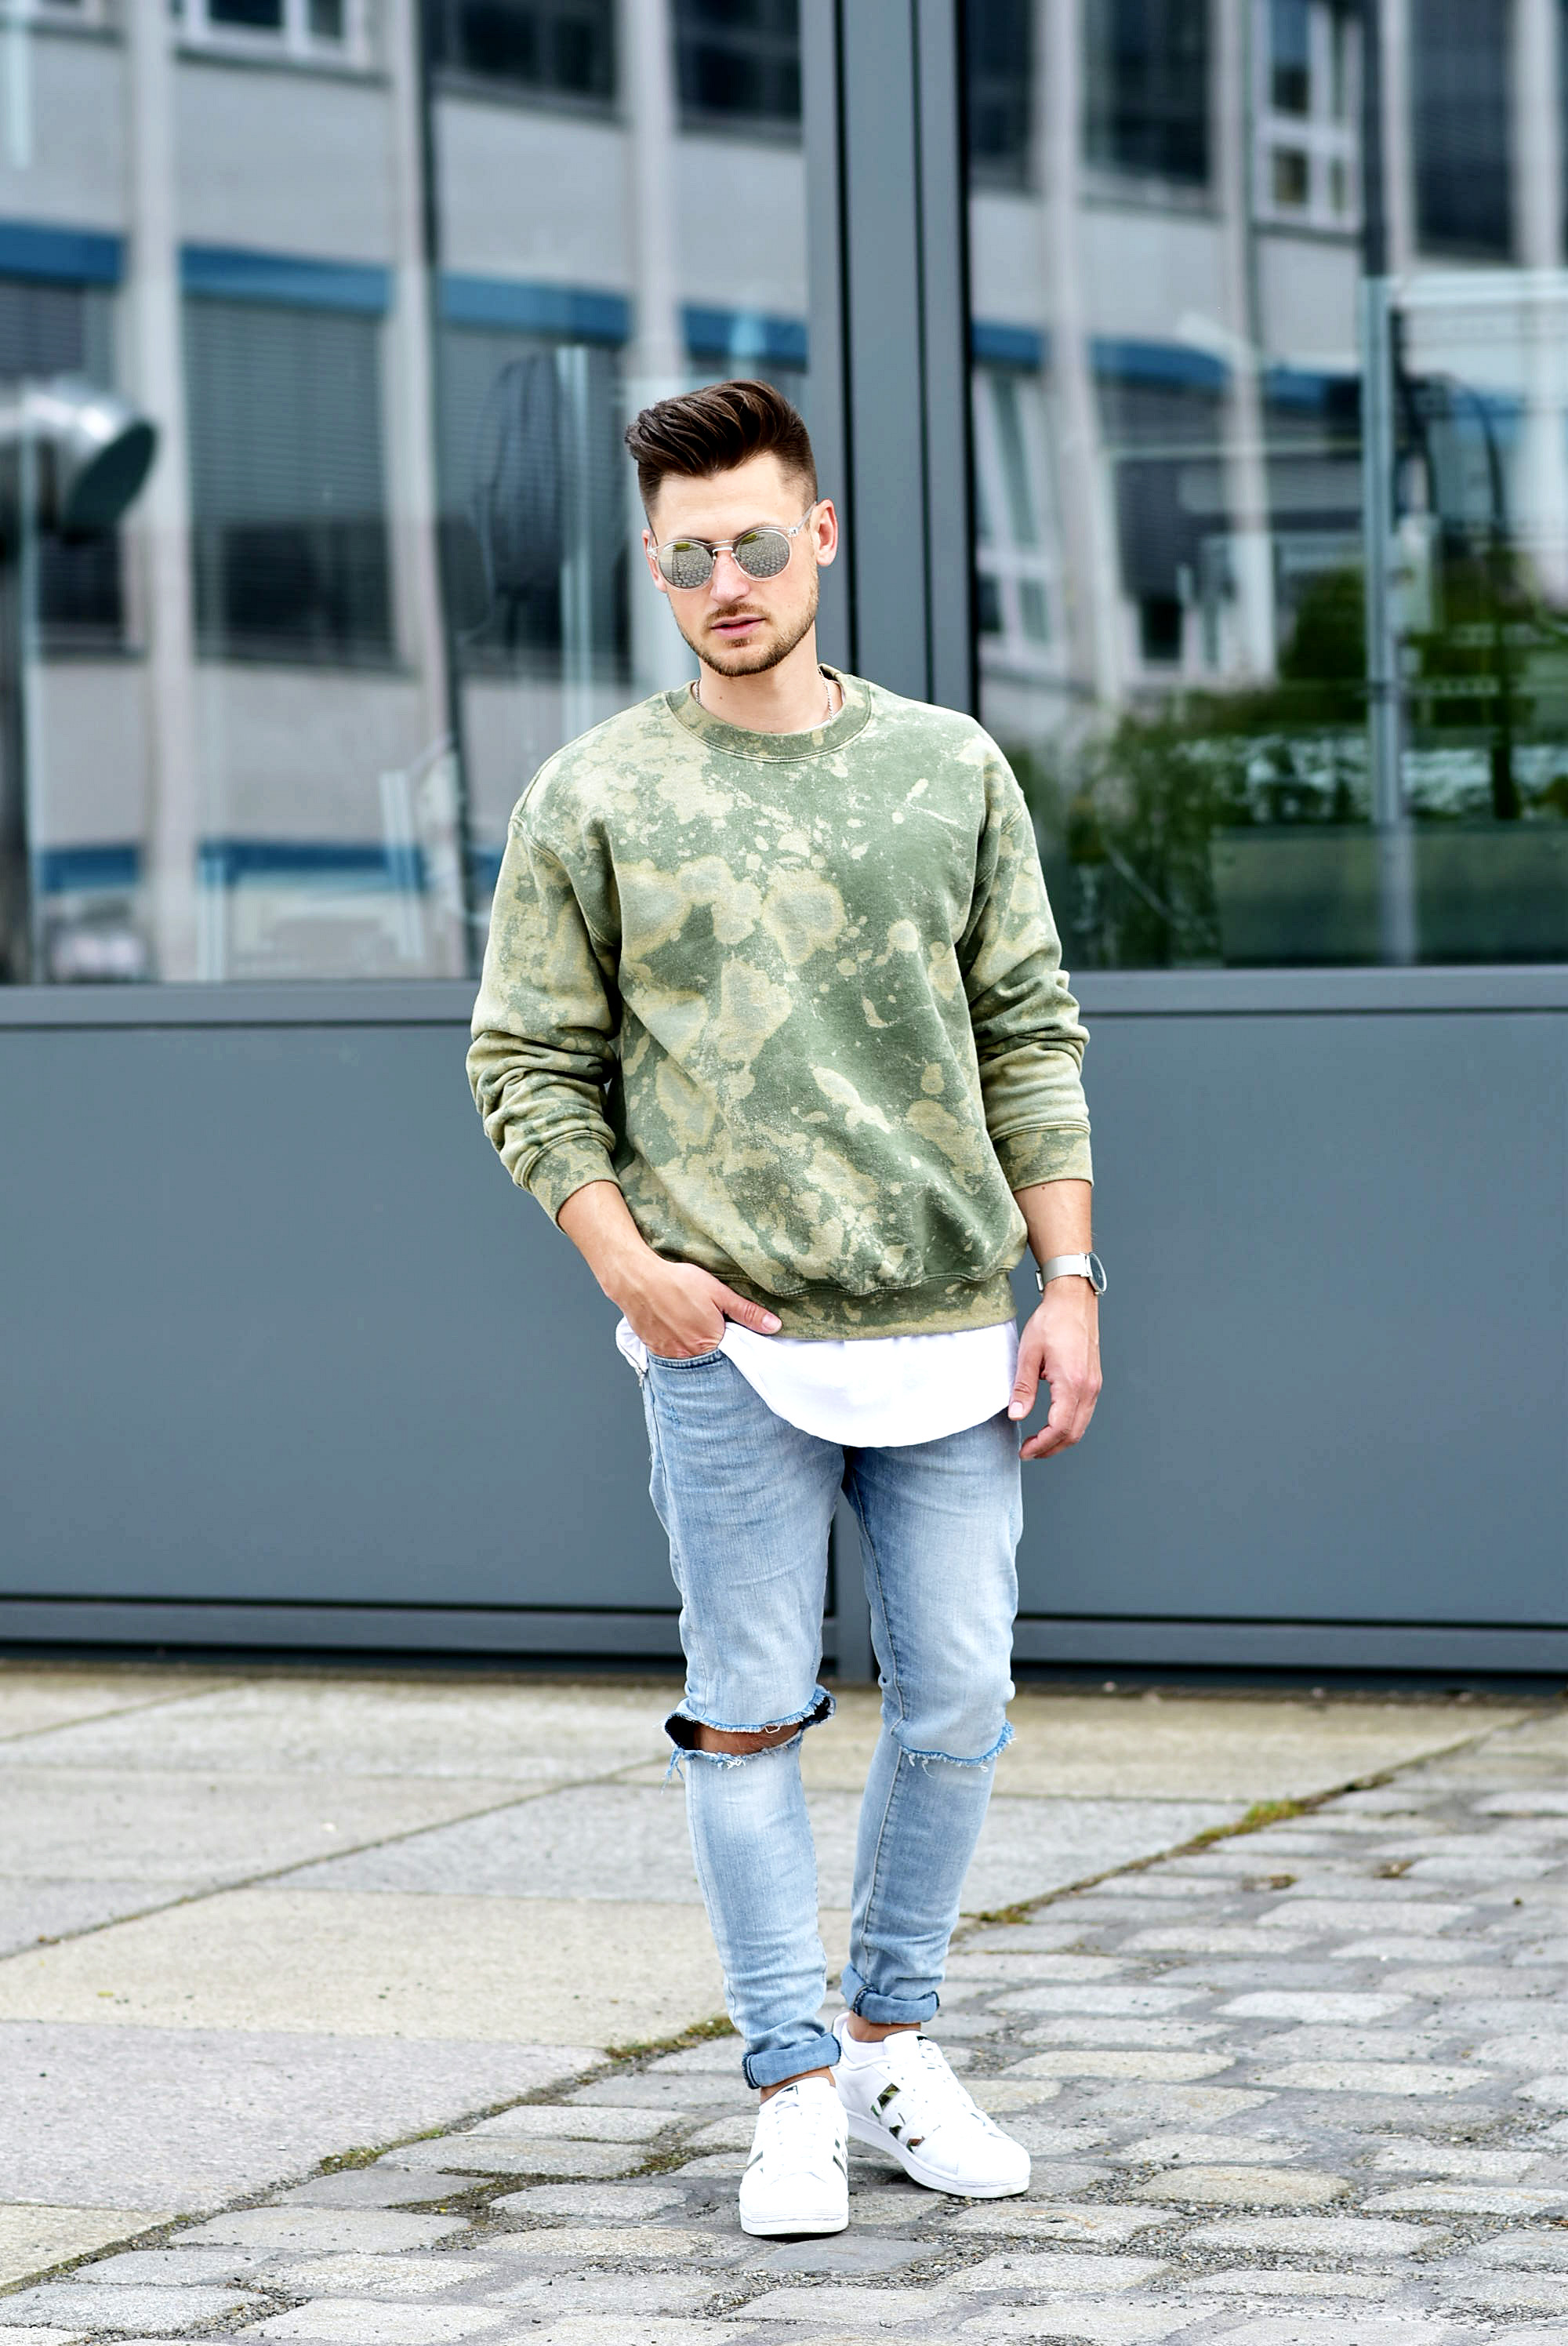 Tommeezjerry-Styleblog-Männerblog-Männer-Modeblog-Berlin-Berlinblog-Outfit-Streetlook-Vintage-Retro-Oversized-Adidas-Superstar-Skinny-Jeans-Camouflage-Military